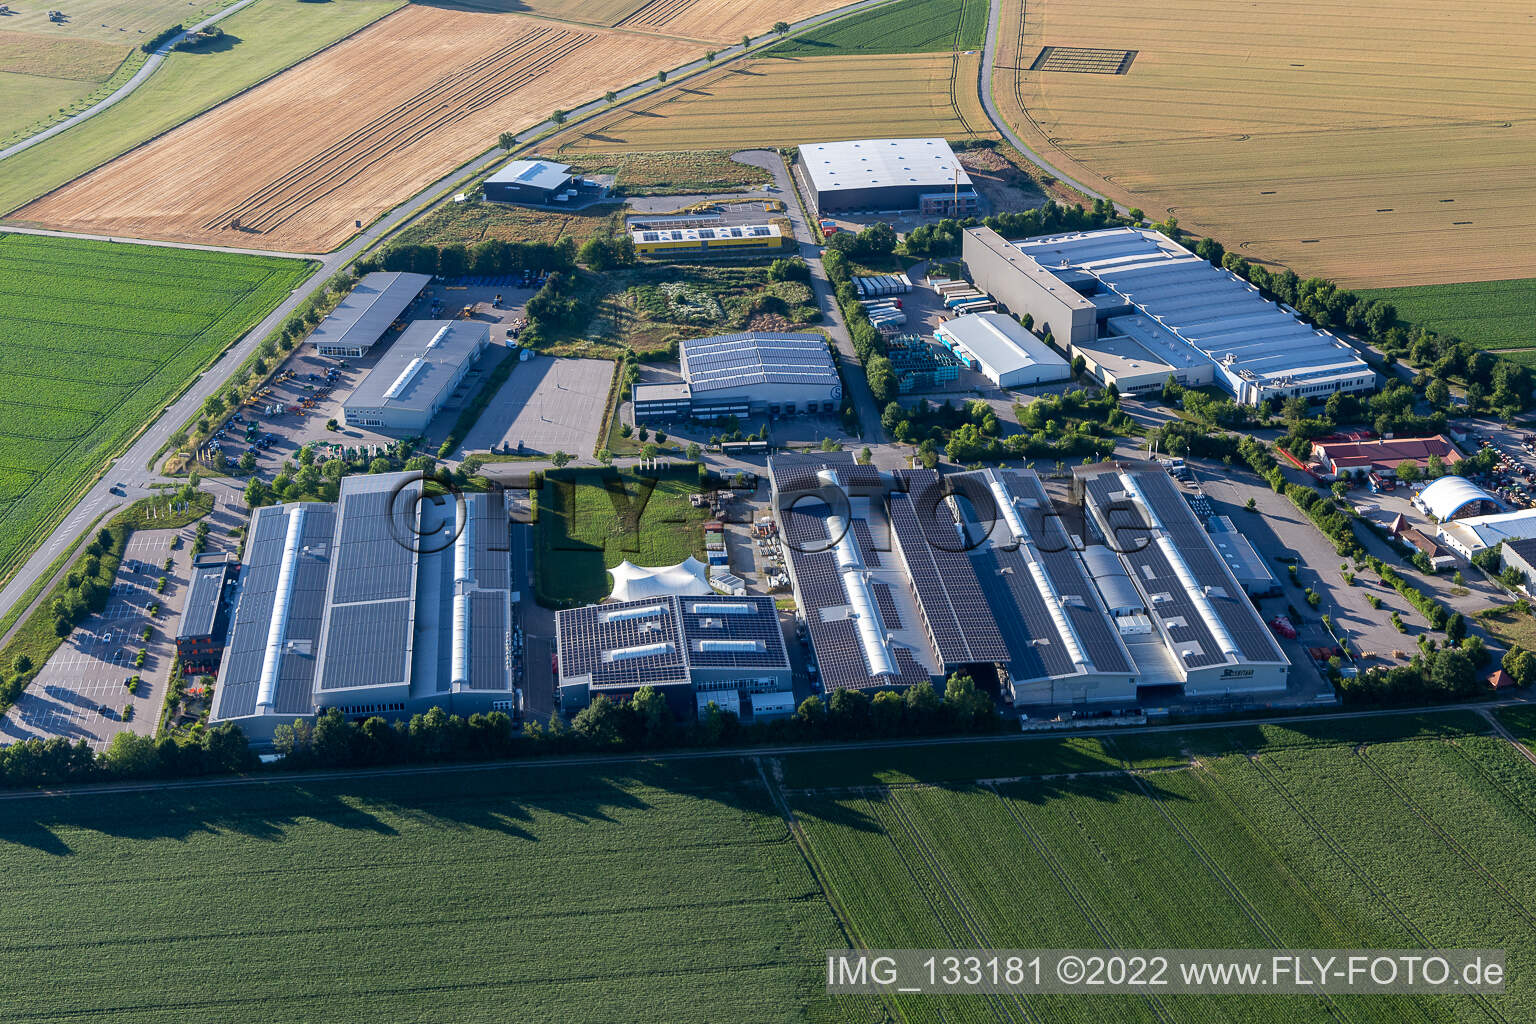 Sturm Maschinen- & Anlagenbau GmbH in Salching in the state Bavaria, Germany